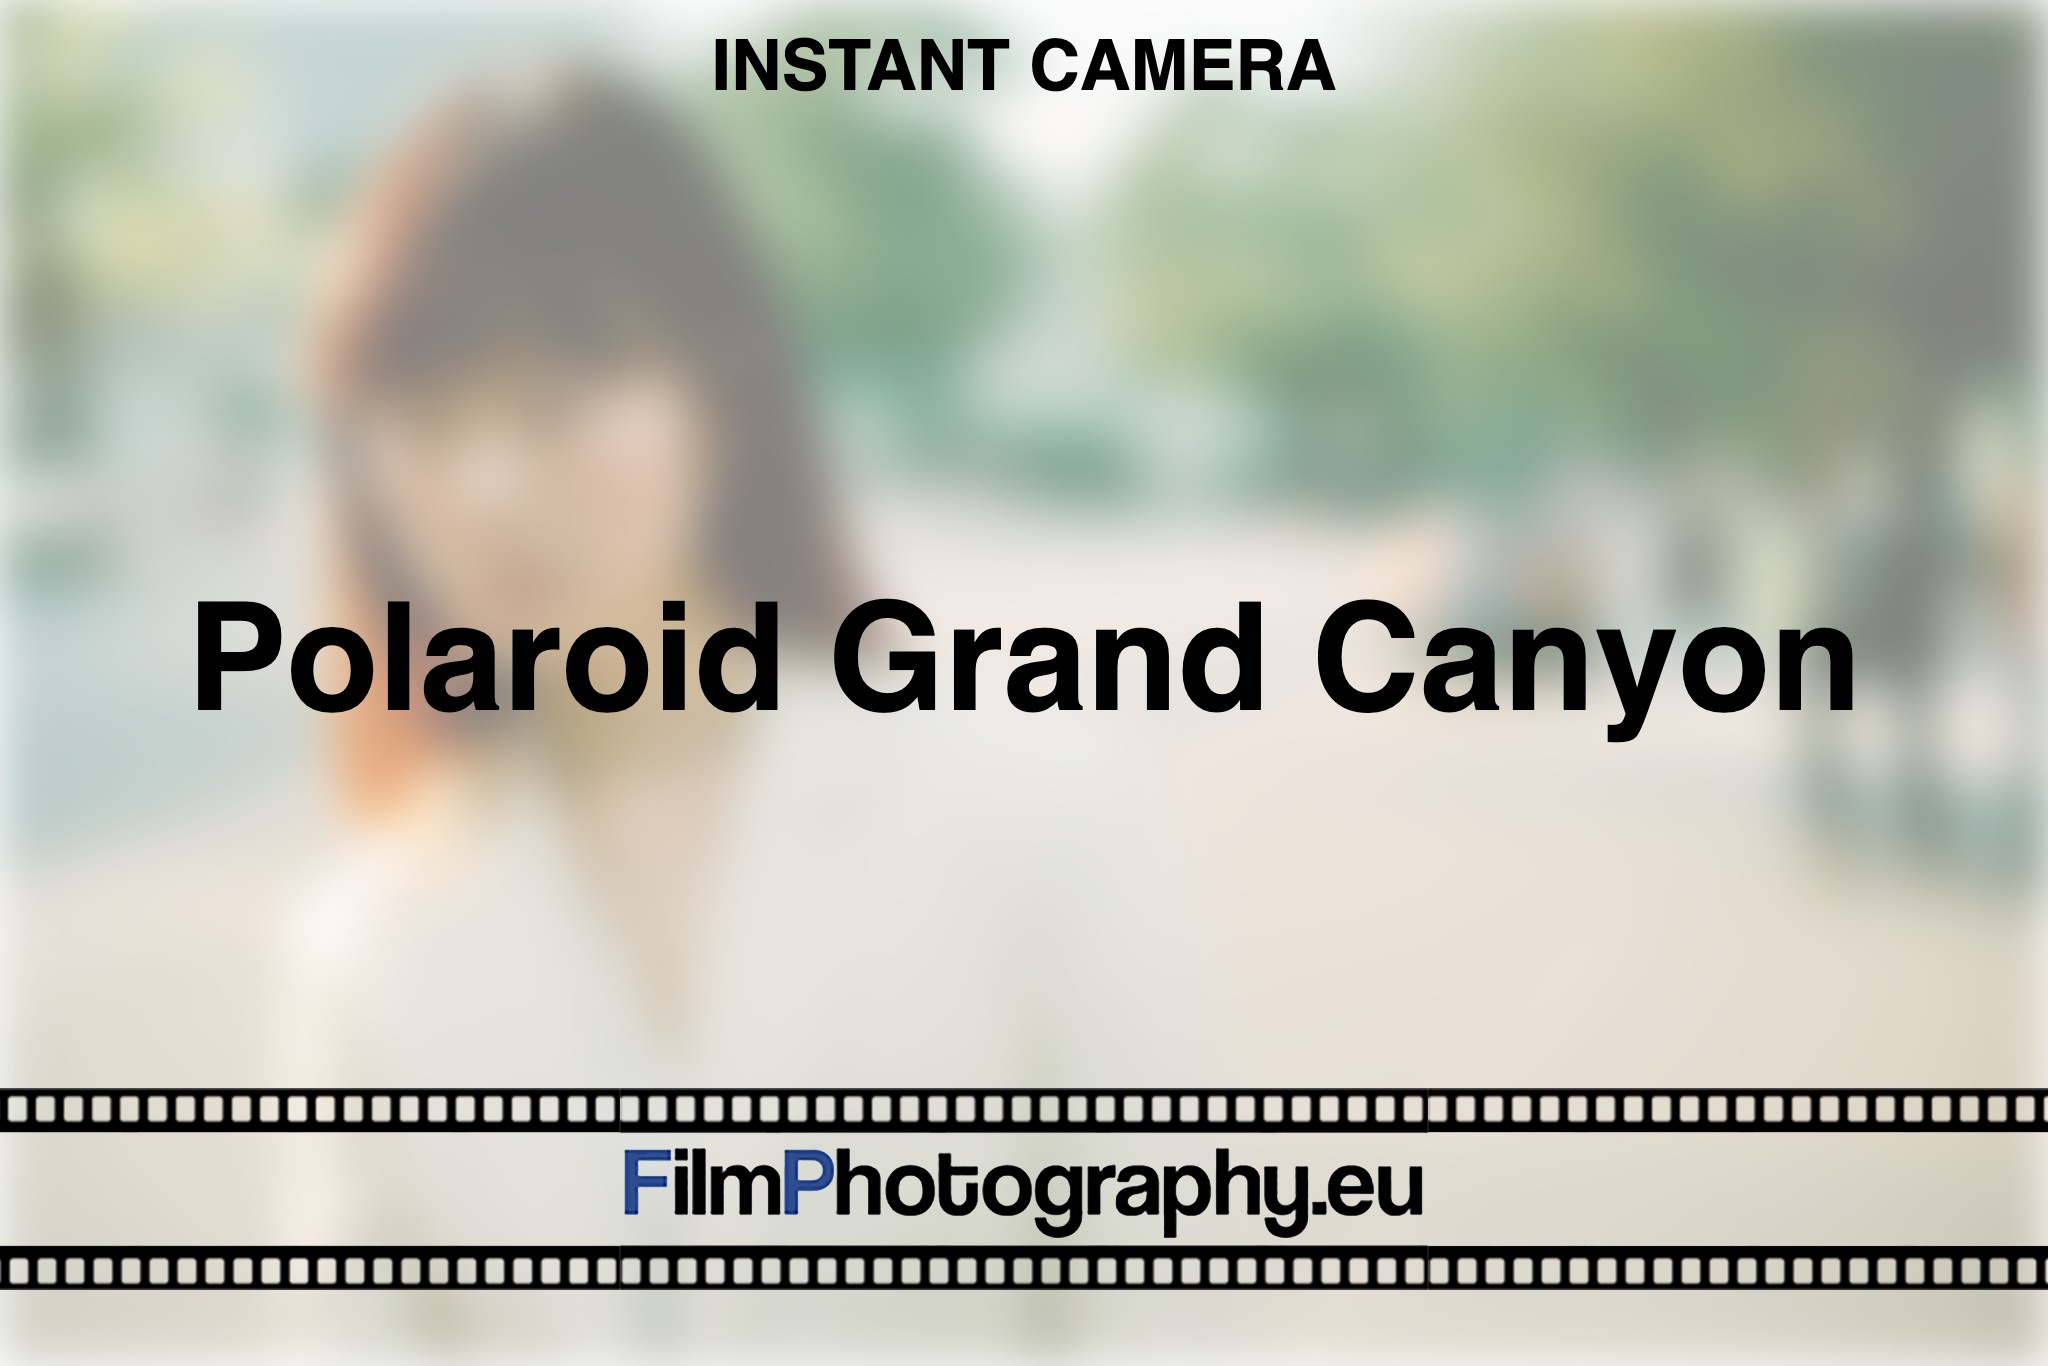 polaroid-grand-canyon-instant-camera-bnv